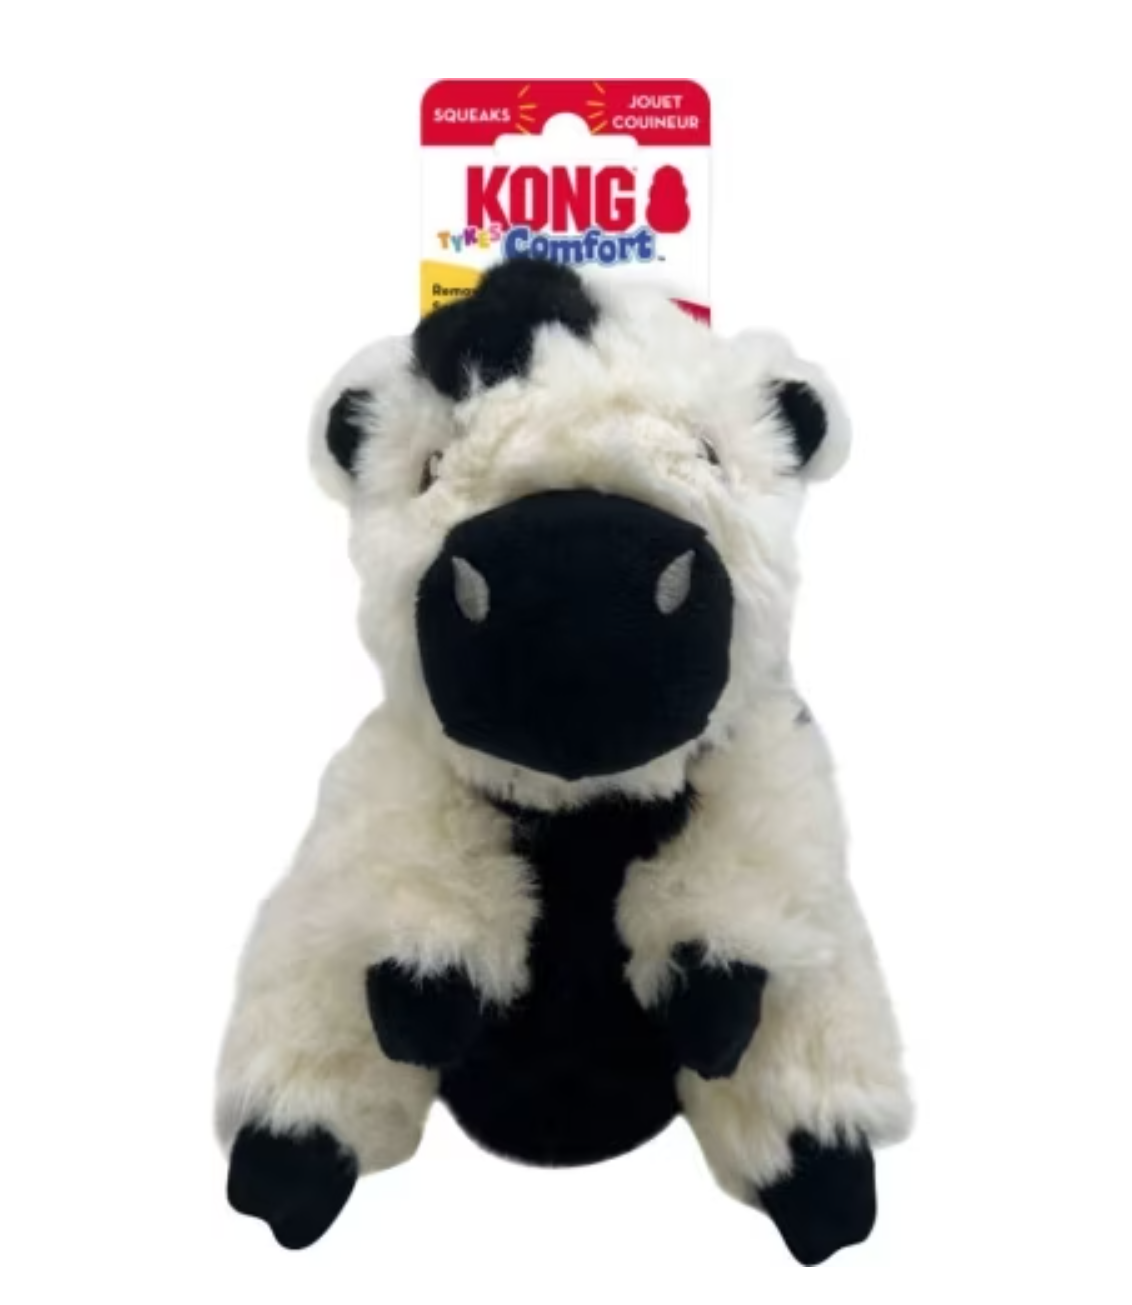 Kong Dog Comfort Tykes - Cow